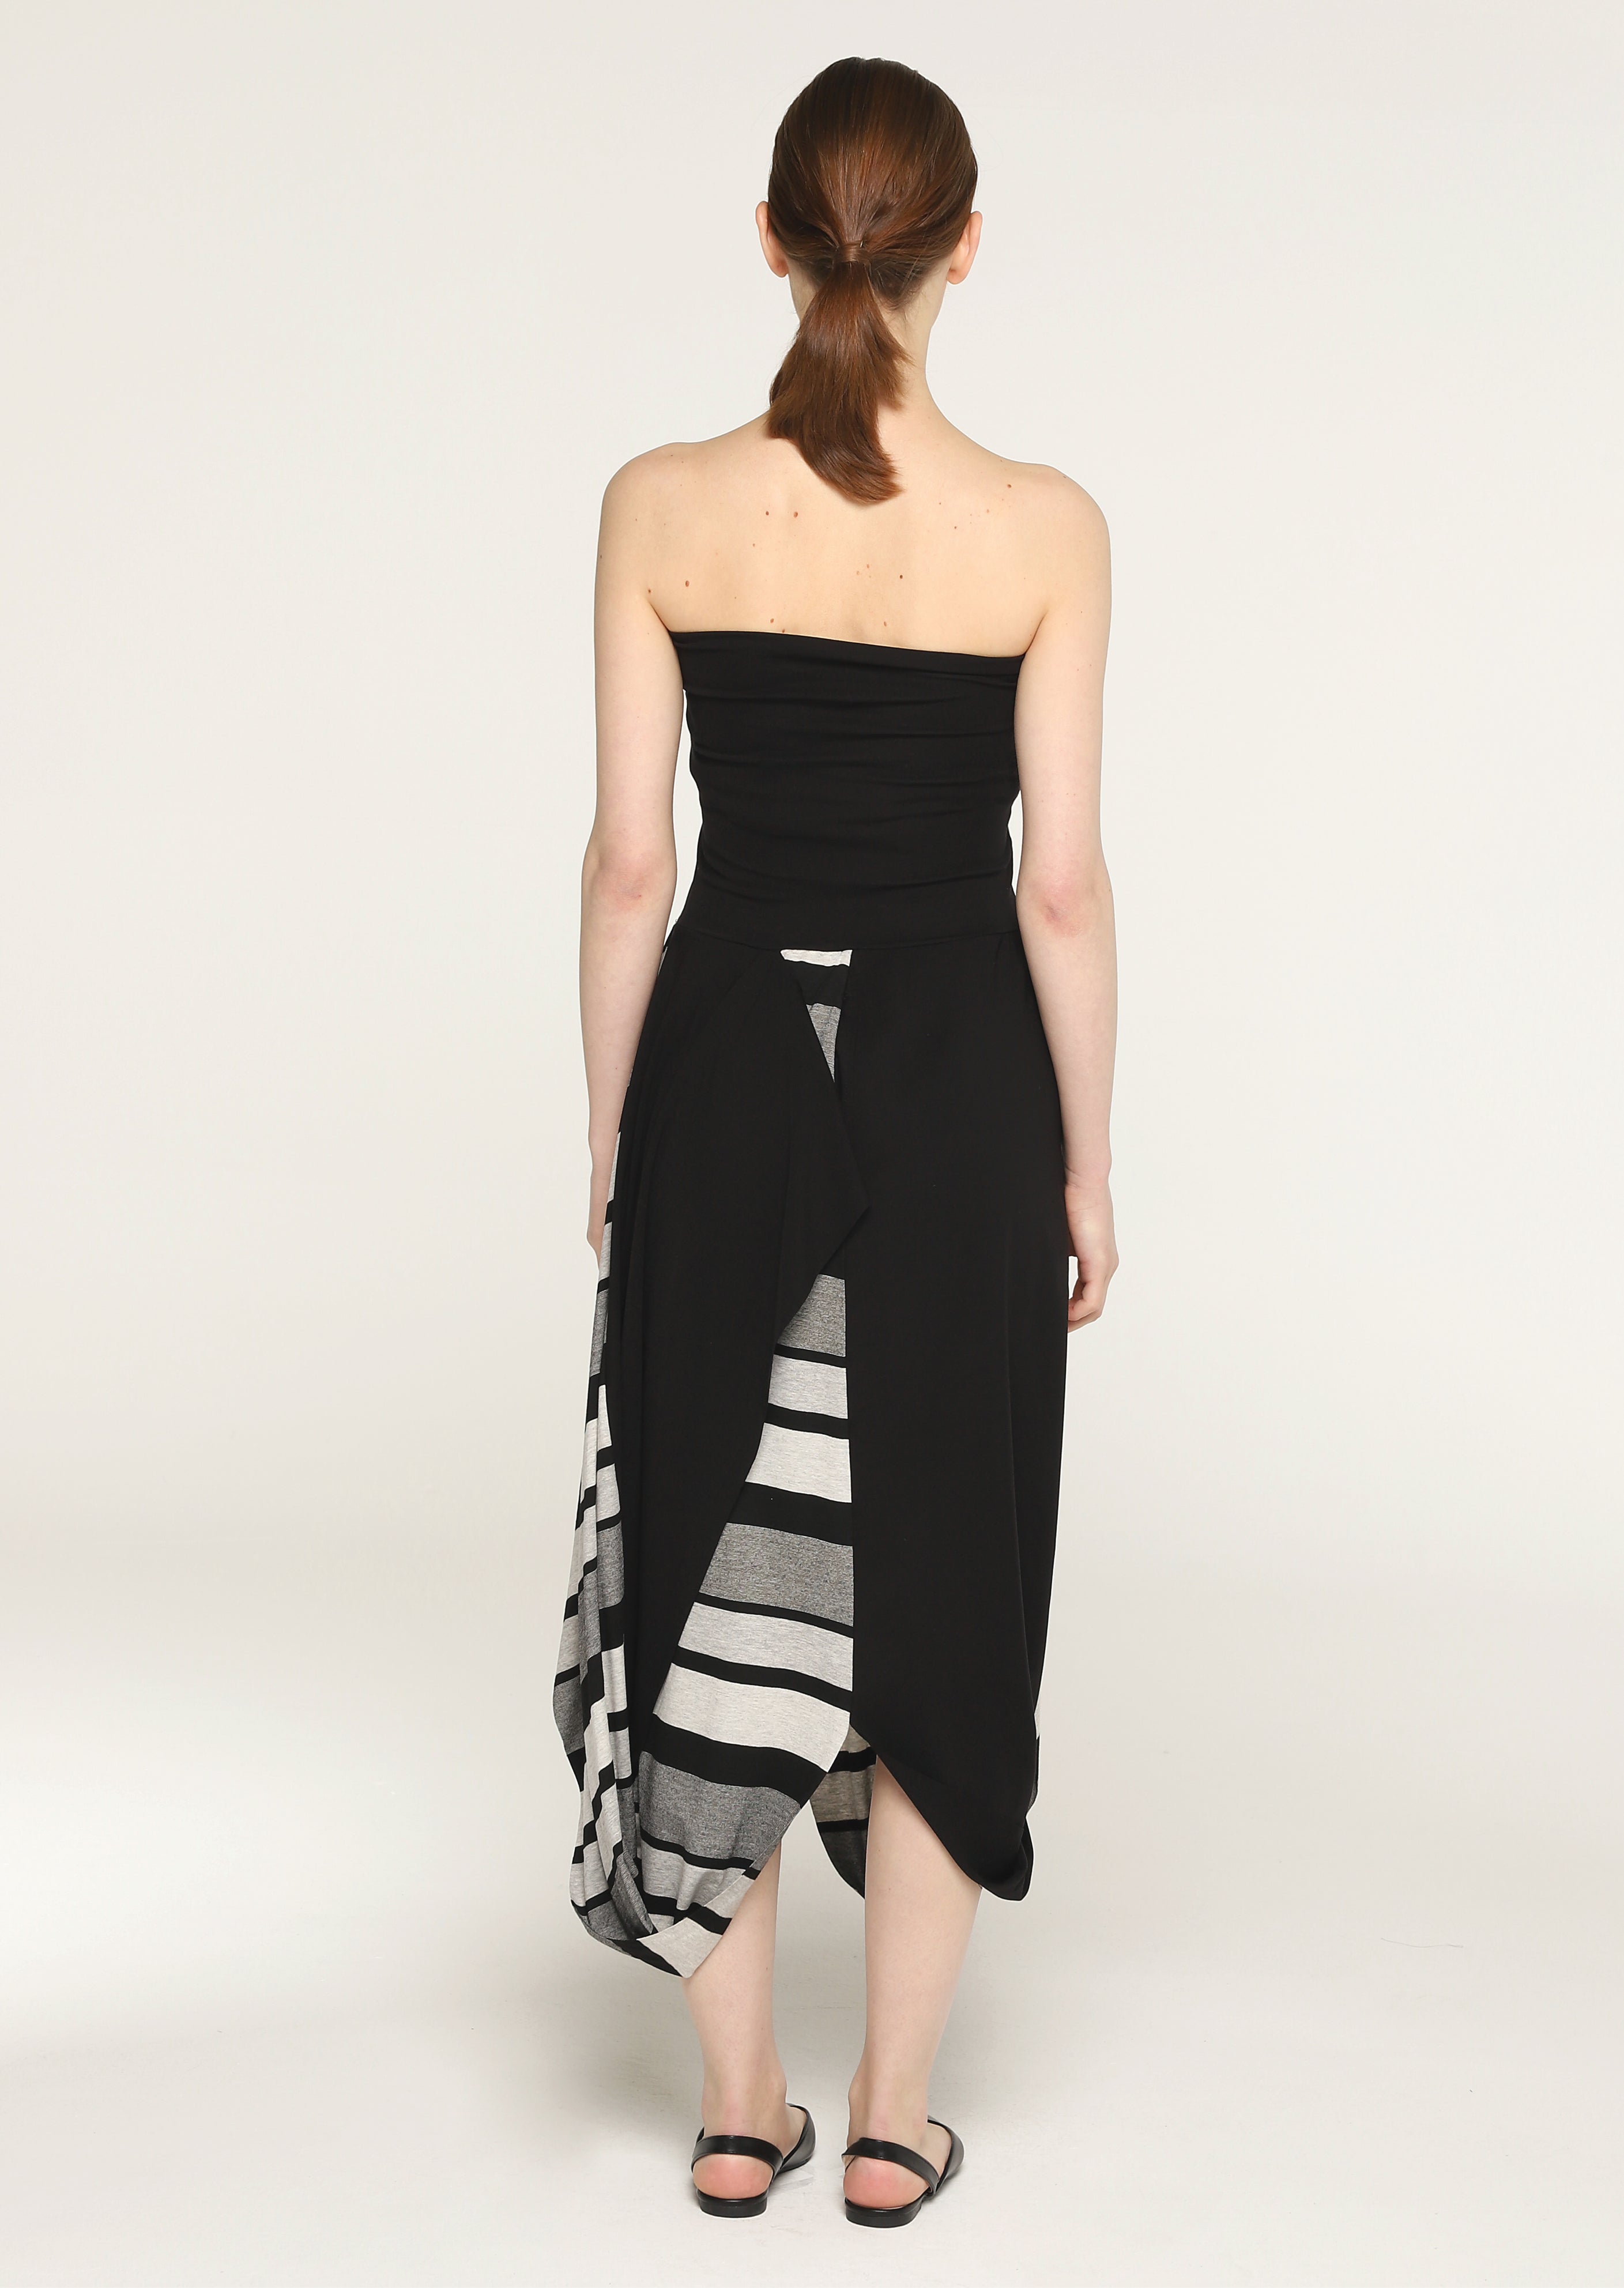 Igor Dobranic Elvira Dress/Skirt, Black Stripe - Statement Boutique